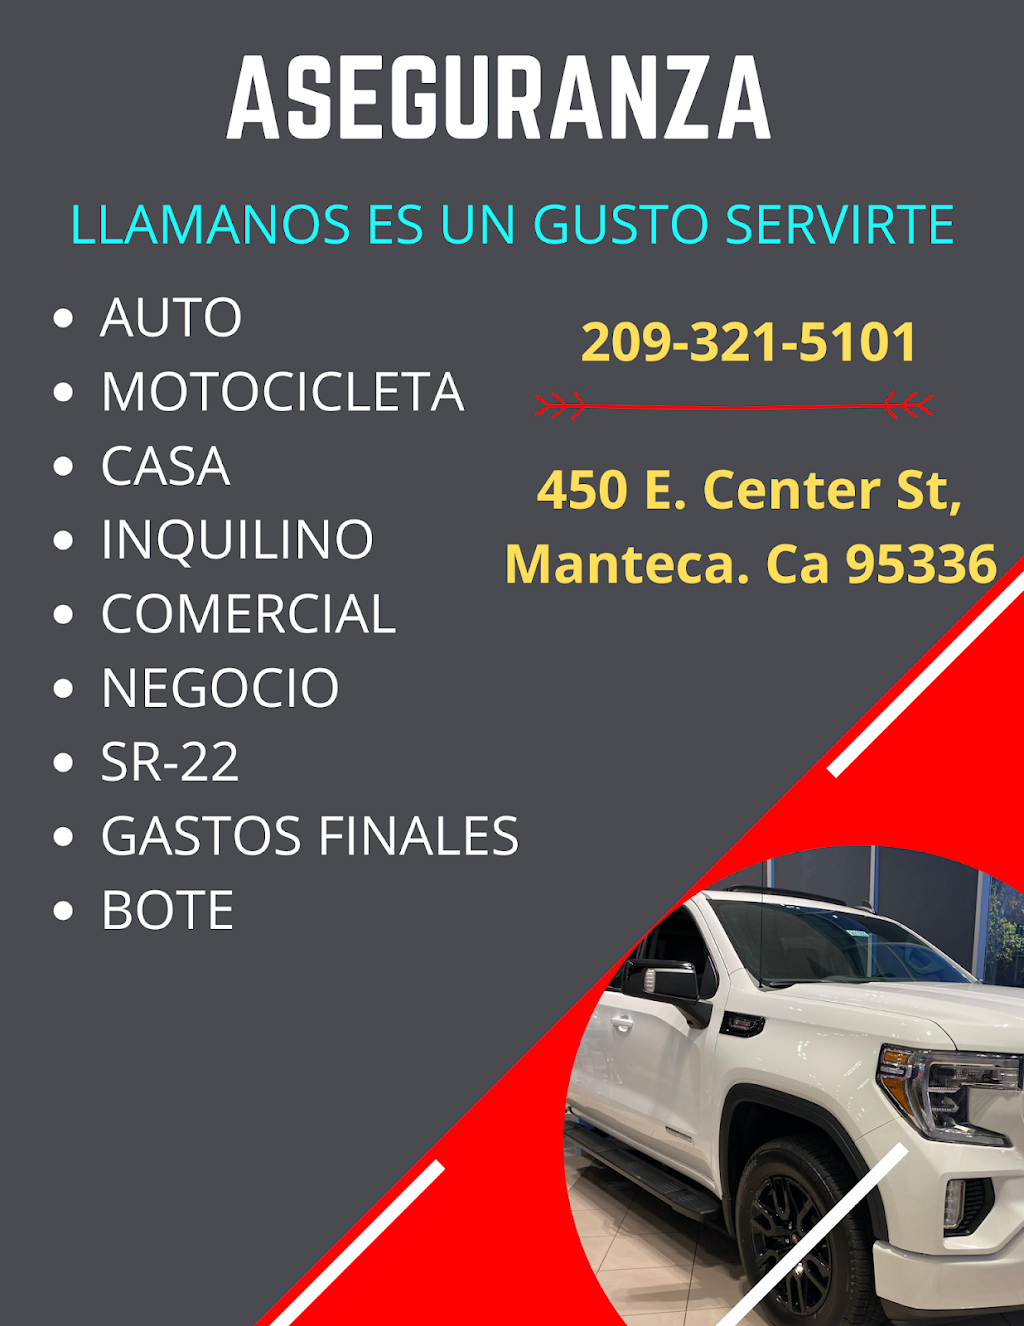 SERVIPRONTO INSURANCE and Dmv Vehicle Registration Services | 450 E Center St, Manteca, CA 95336, USA | Phone: (209) 321-5101